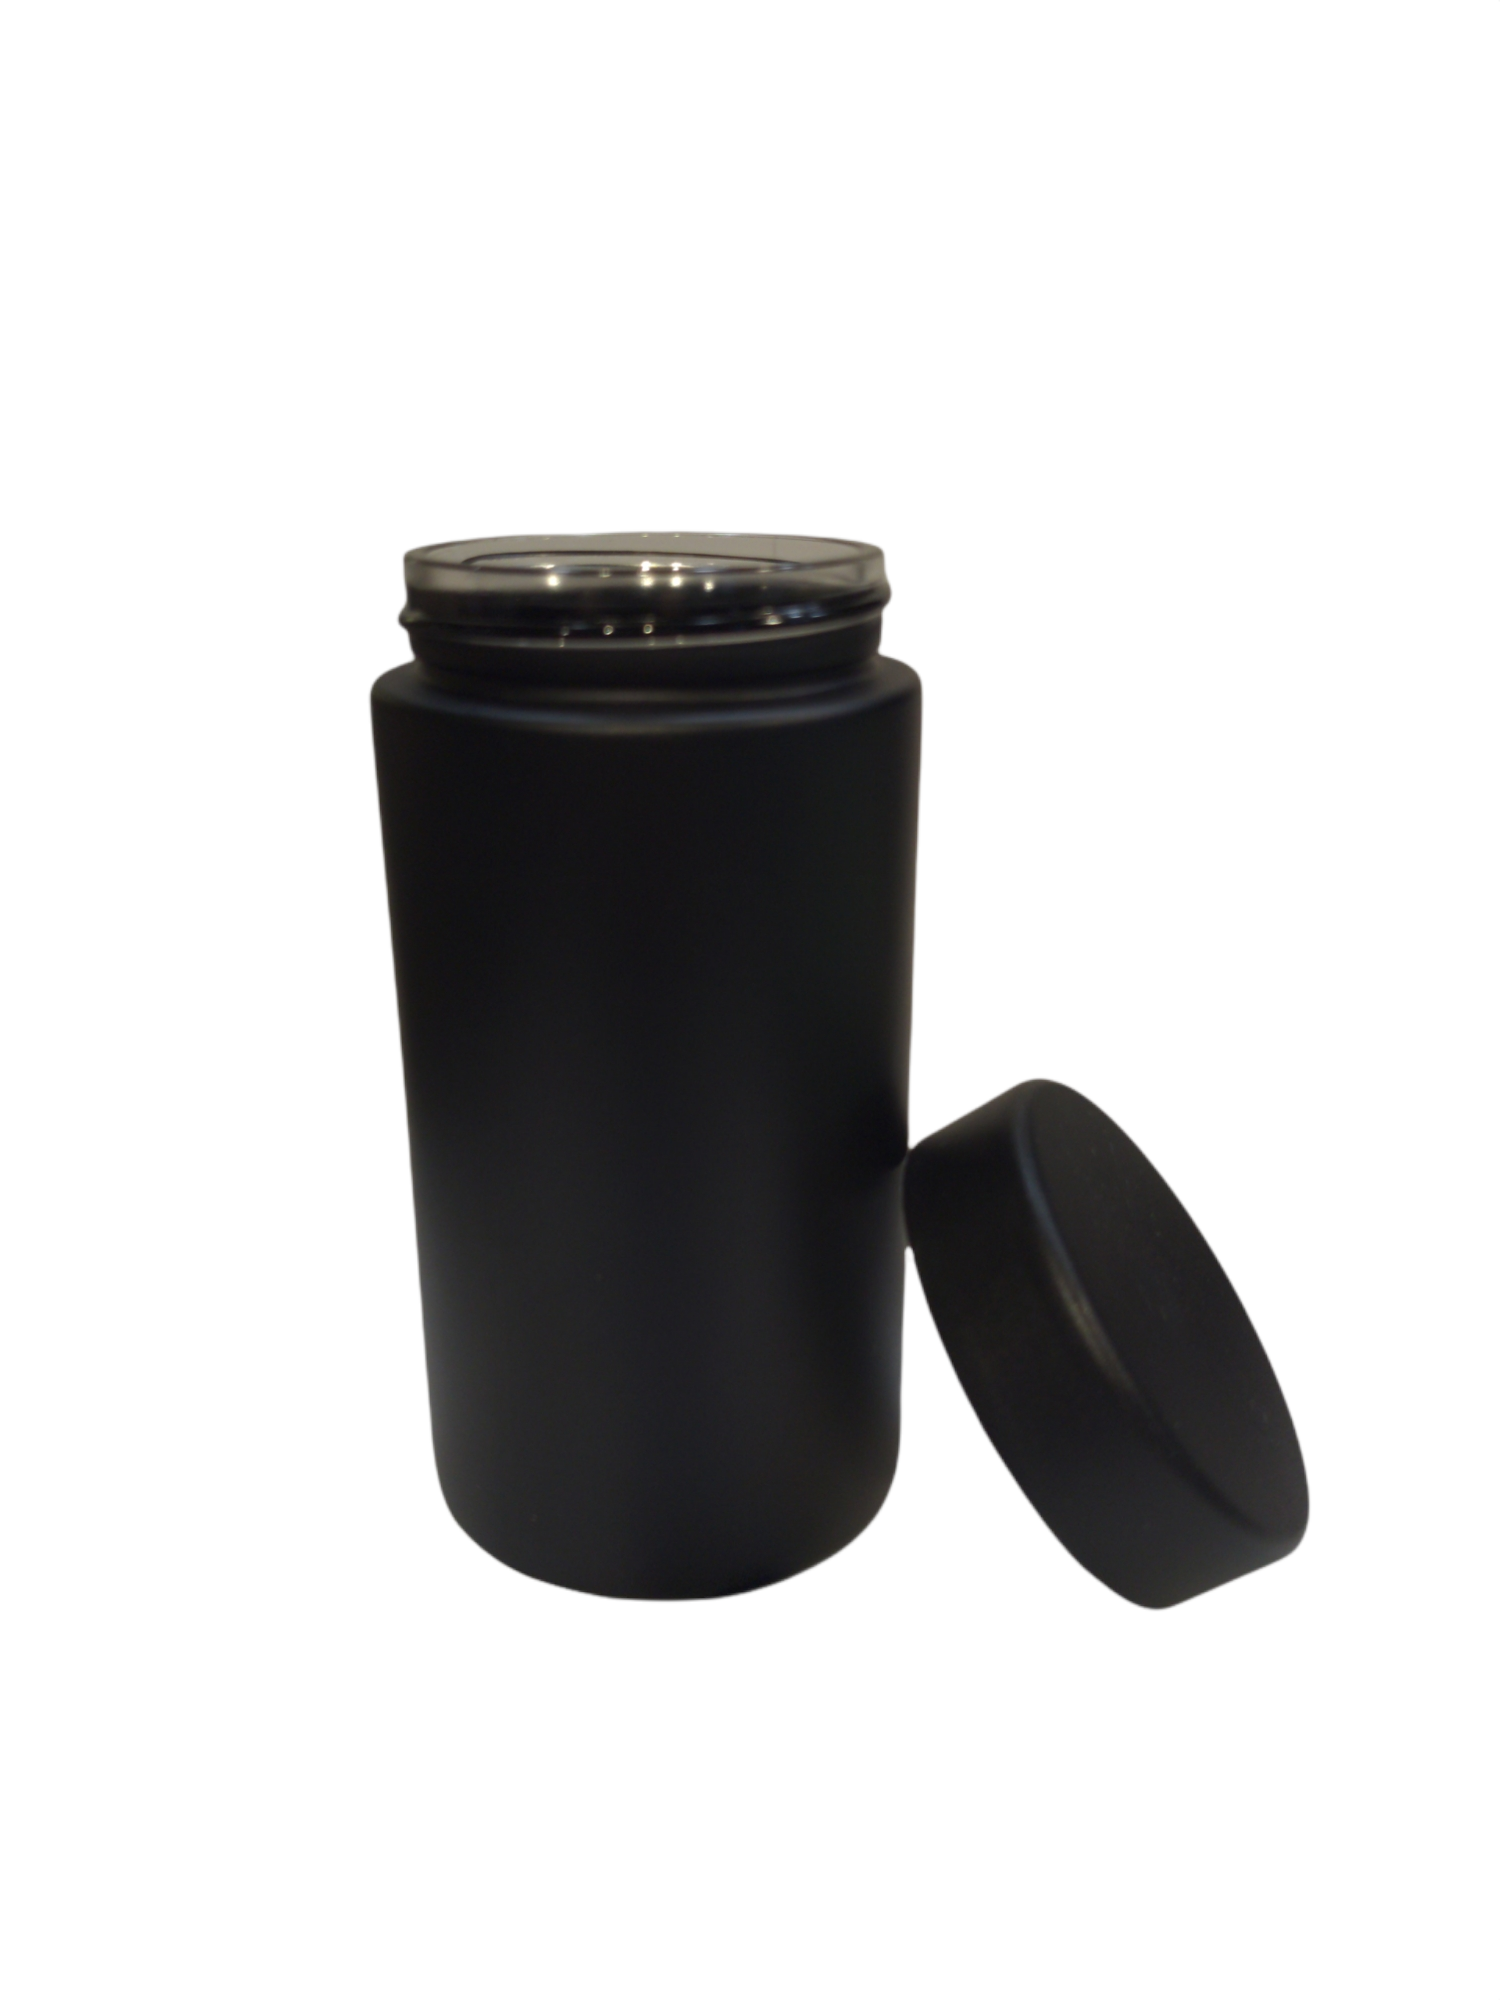 10 oz Child Resistant Glass Jar | Matte Black Jar with Black Plastic Screw Lid MJ Supply Co.